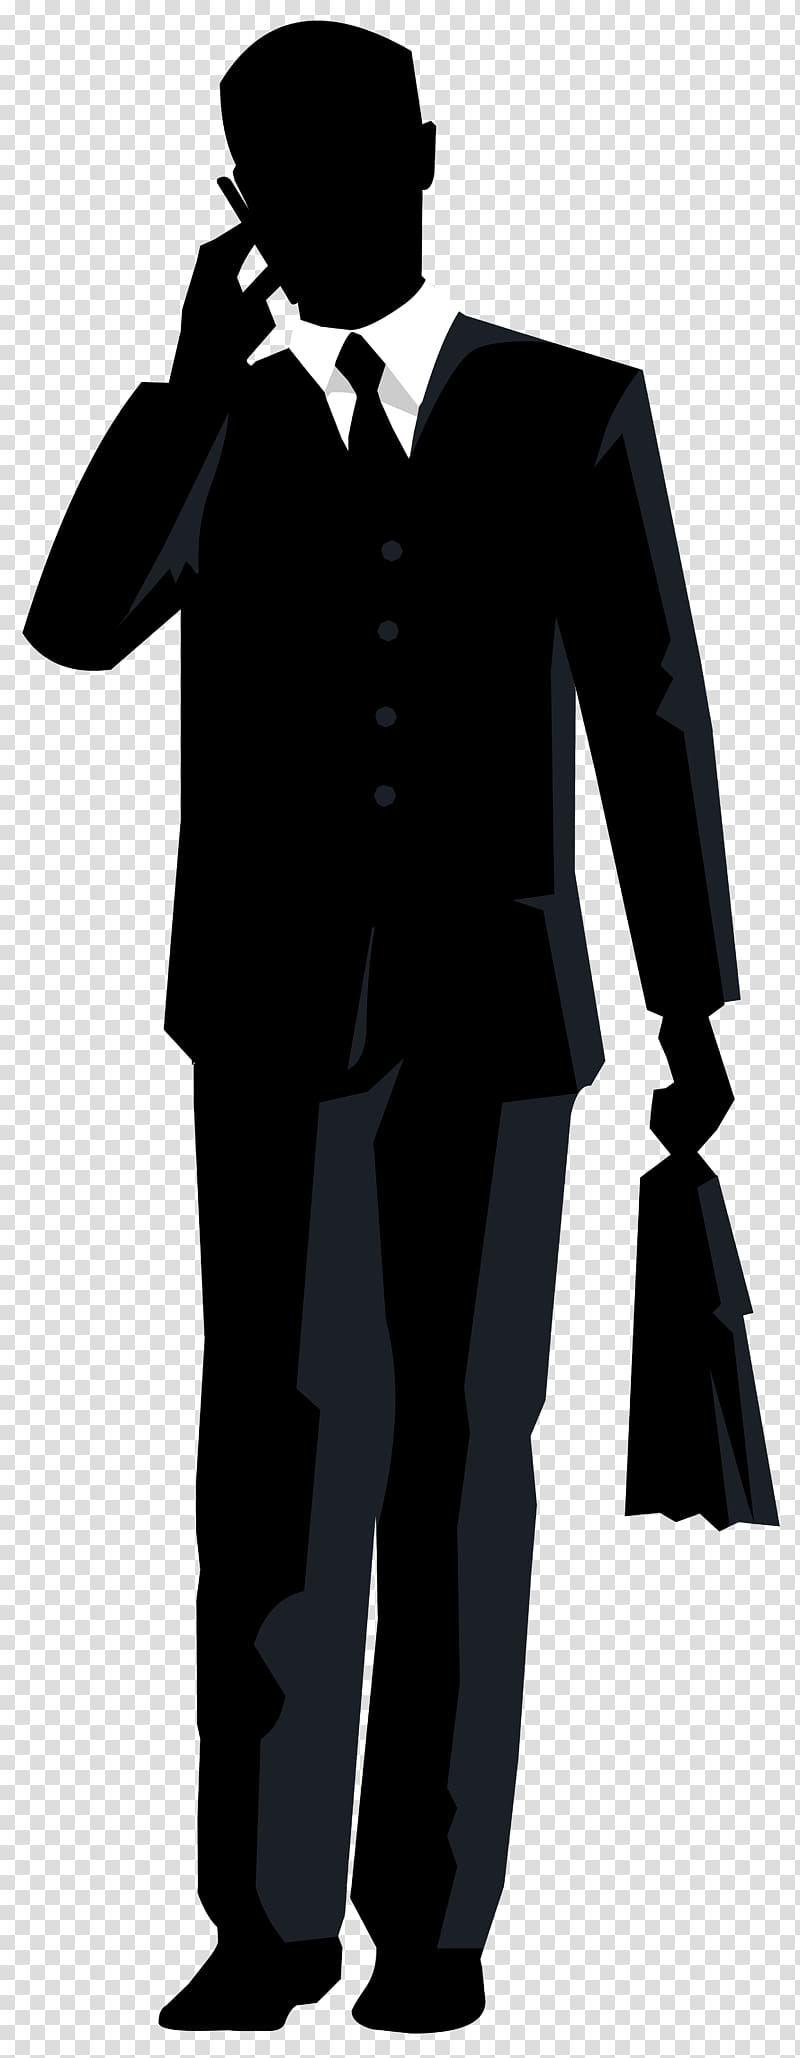 Man In Suit Silhouette Transparent